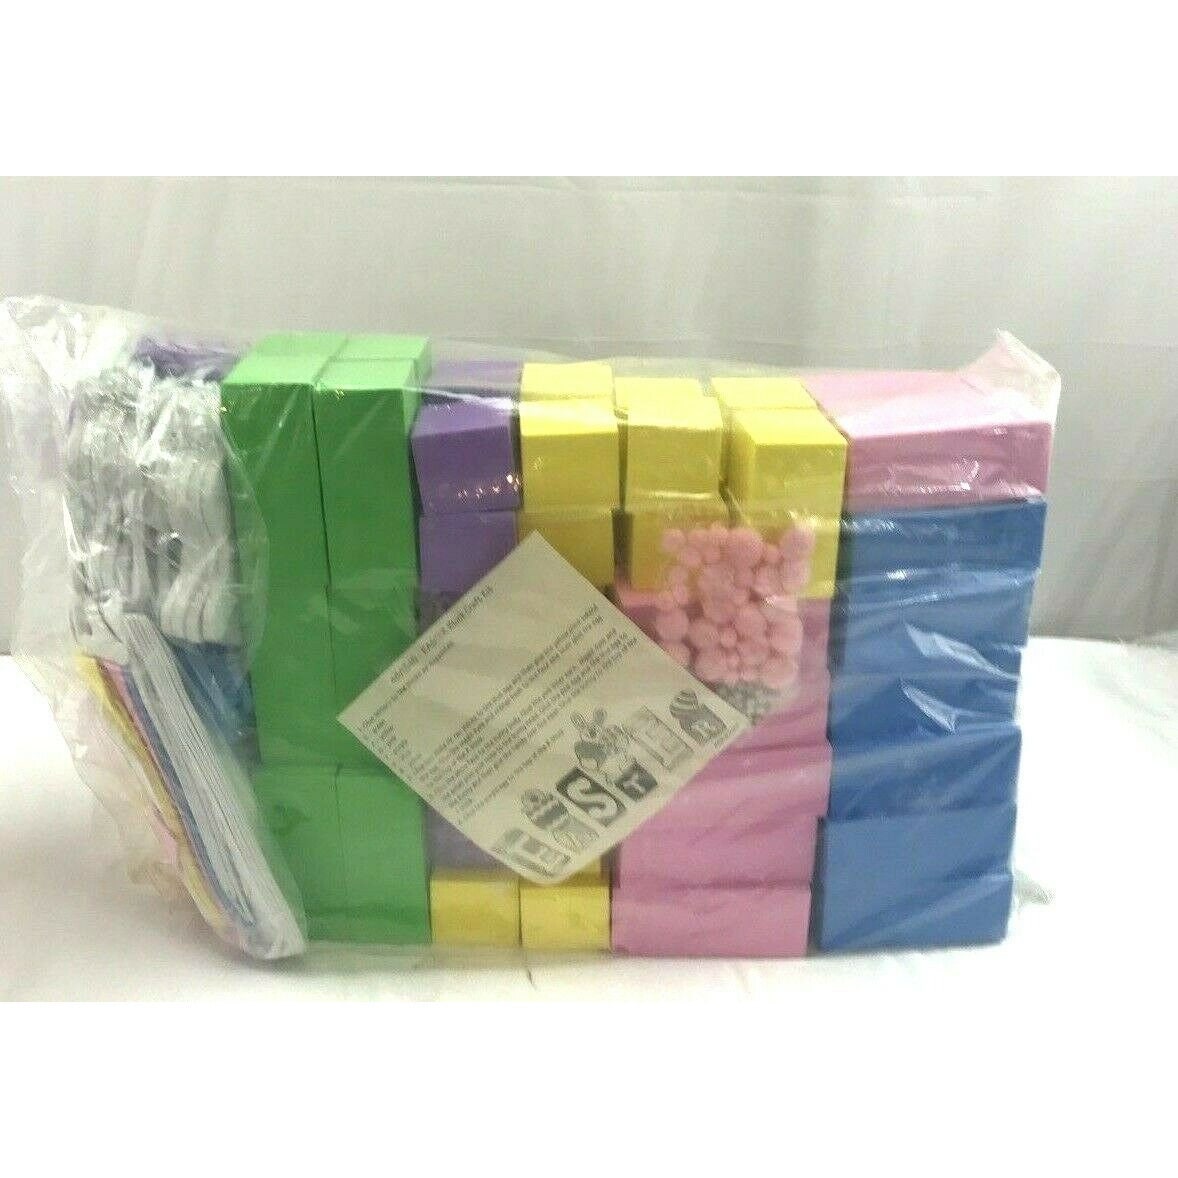 Familymaid 34191 Craft Foam Block - 2 x 4 x 12 in. - Pack of 72